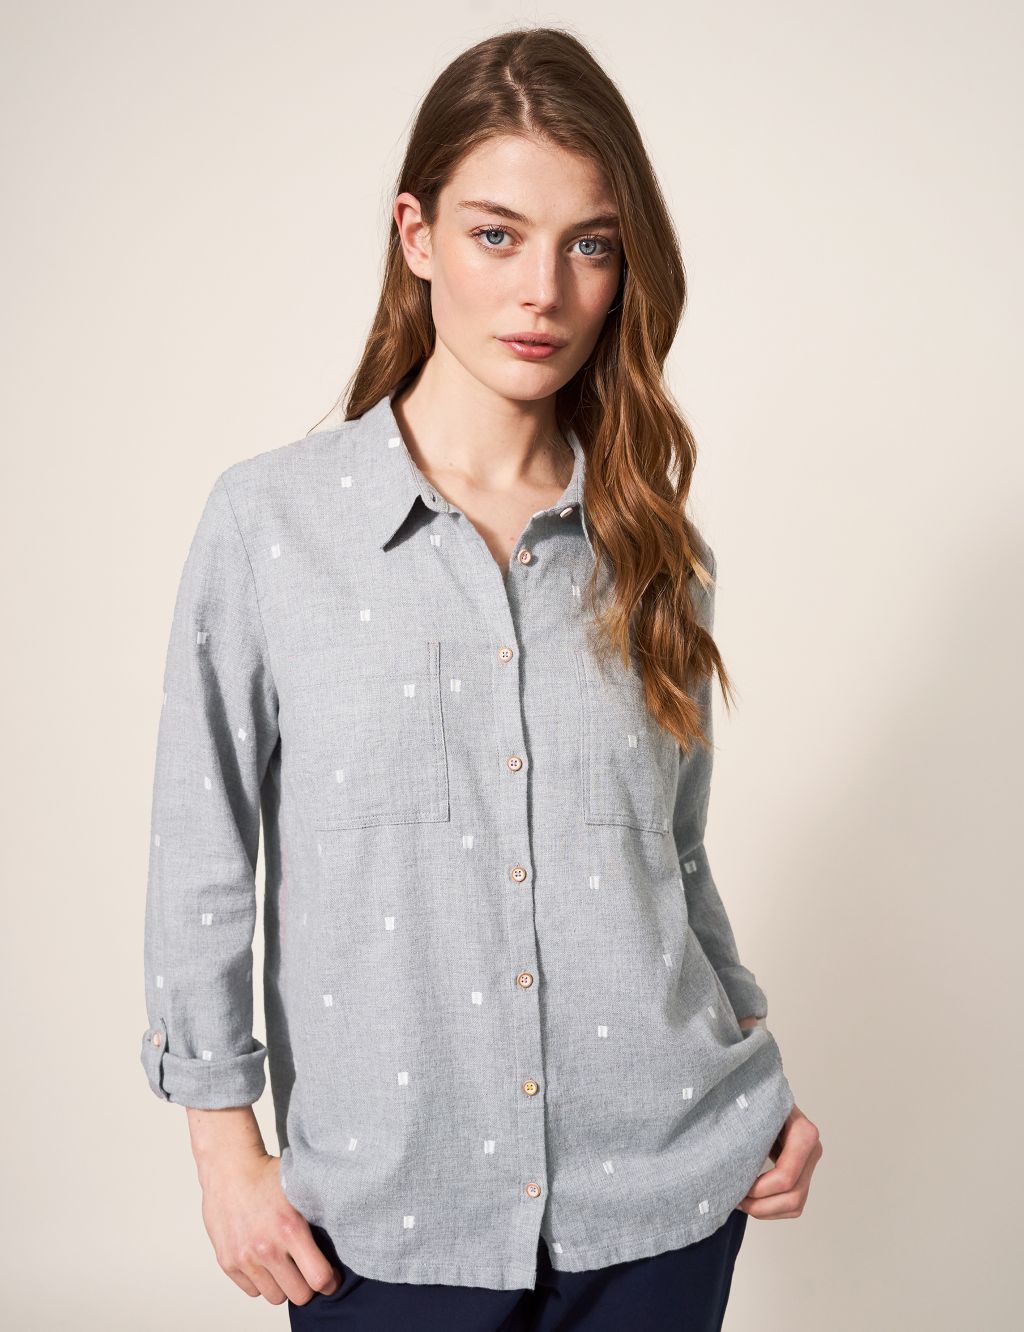 Organic Cotton Textured Collared Shirt image 1